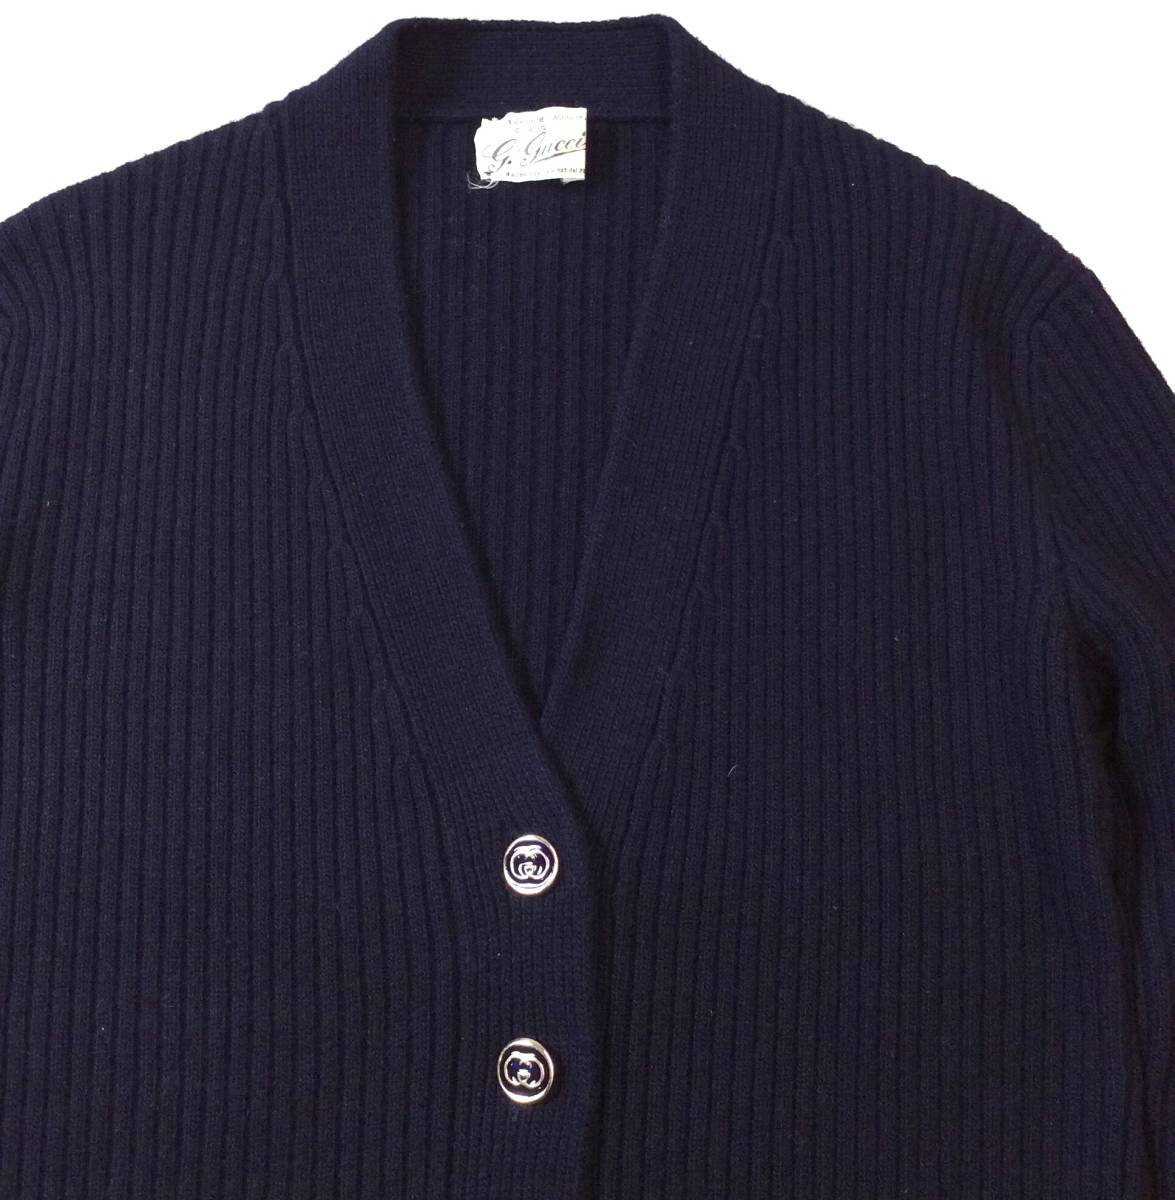 Vintage 80s GUCCI Gucci кашемир 100% вязаный кардиган свитер темно-синий GG Logo металлические принадлежности / кнопка ITALY производства Vintage женский 42